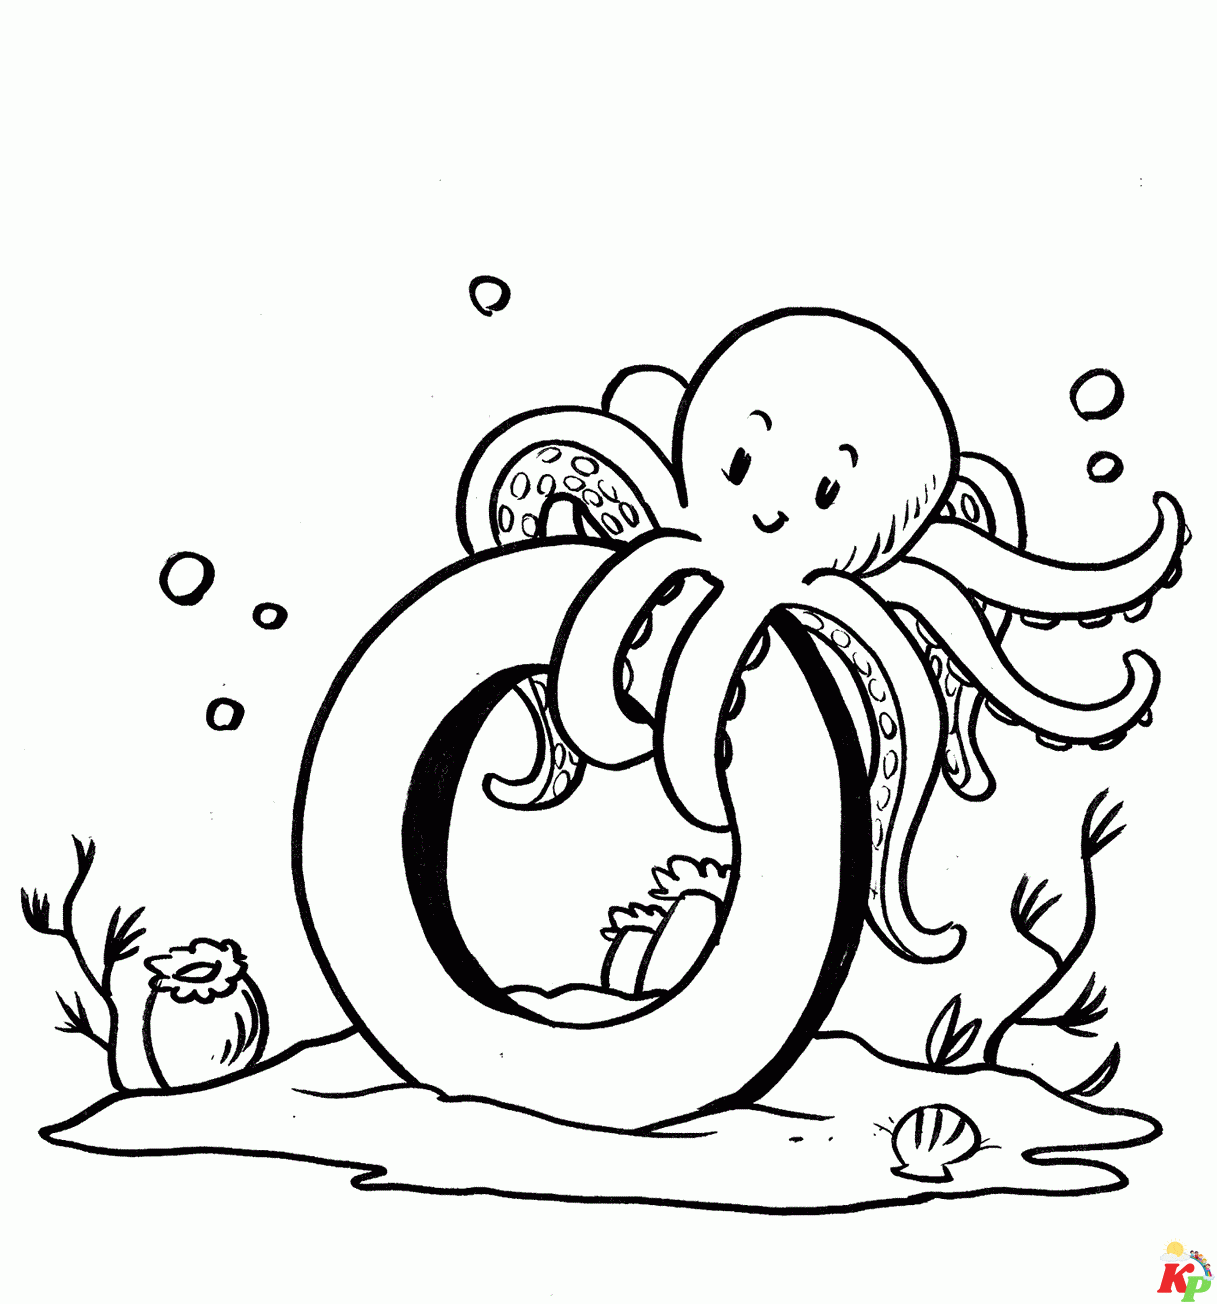 Octopus10